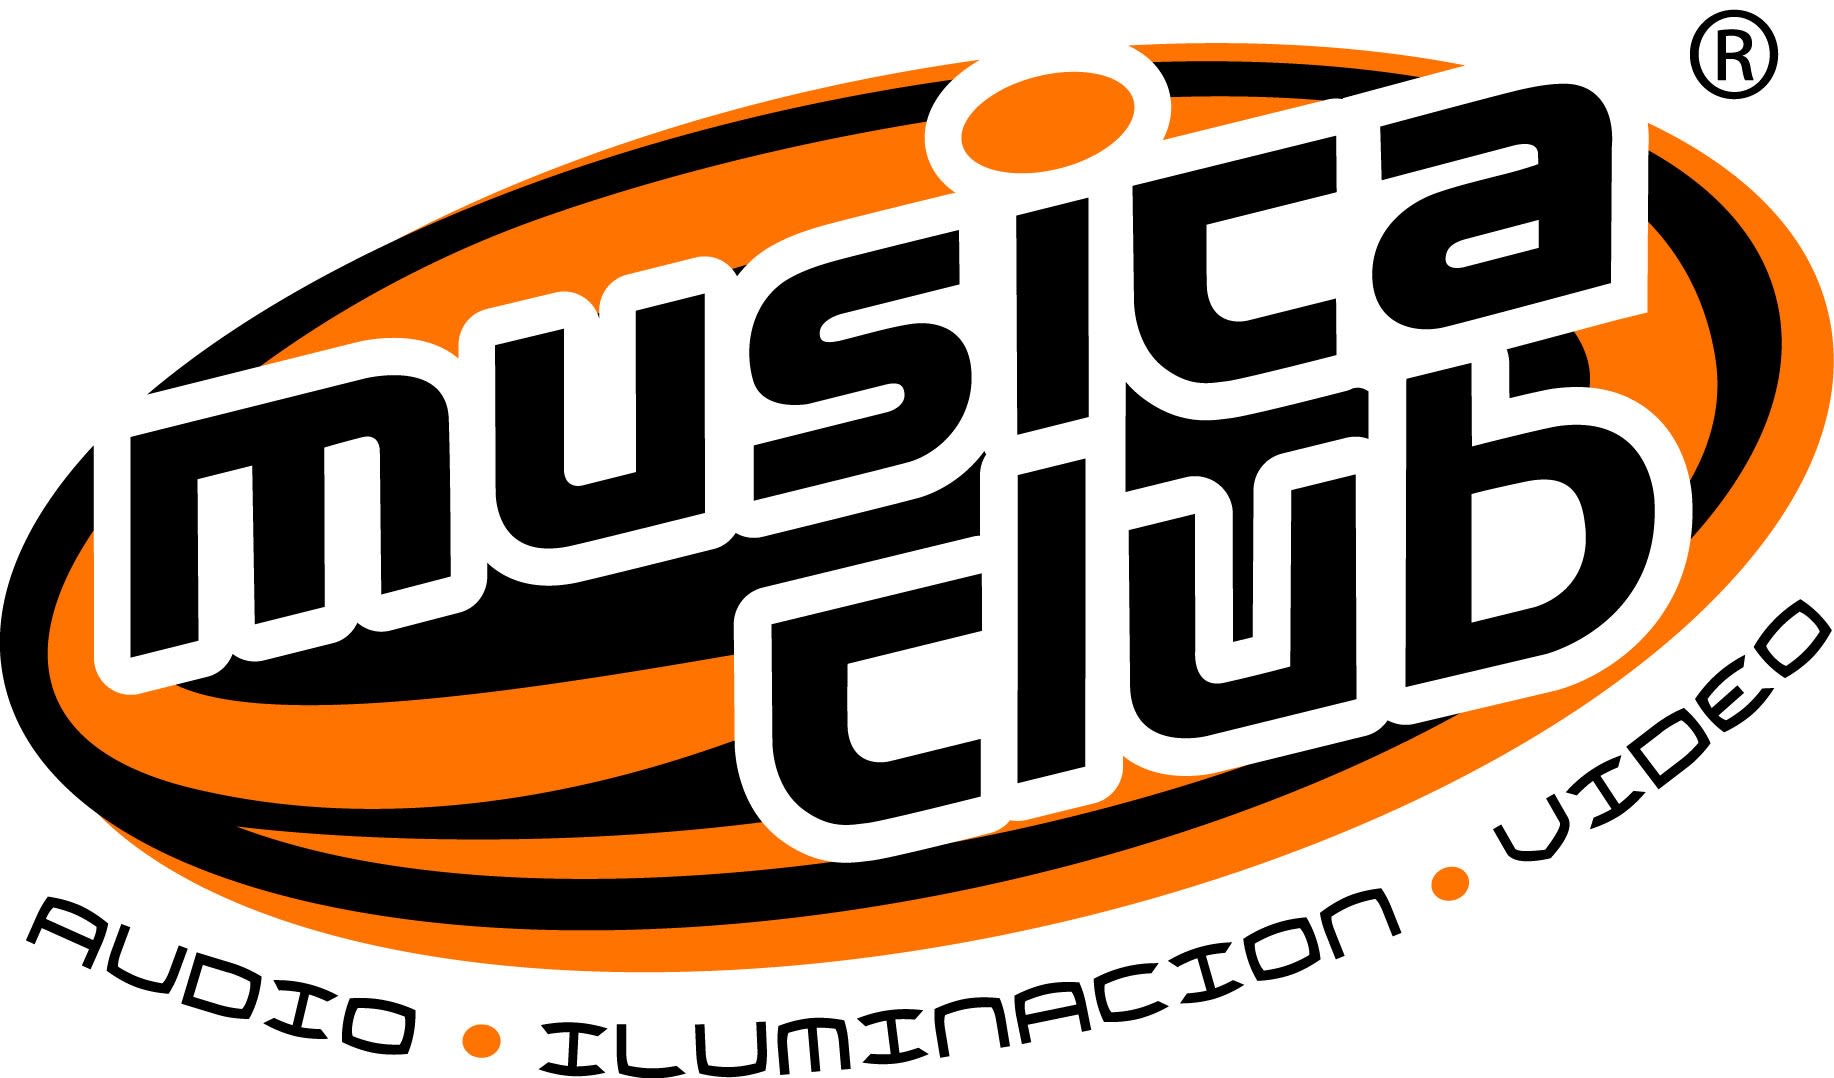 Música Club Dj